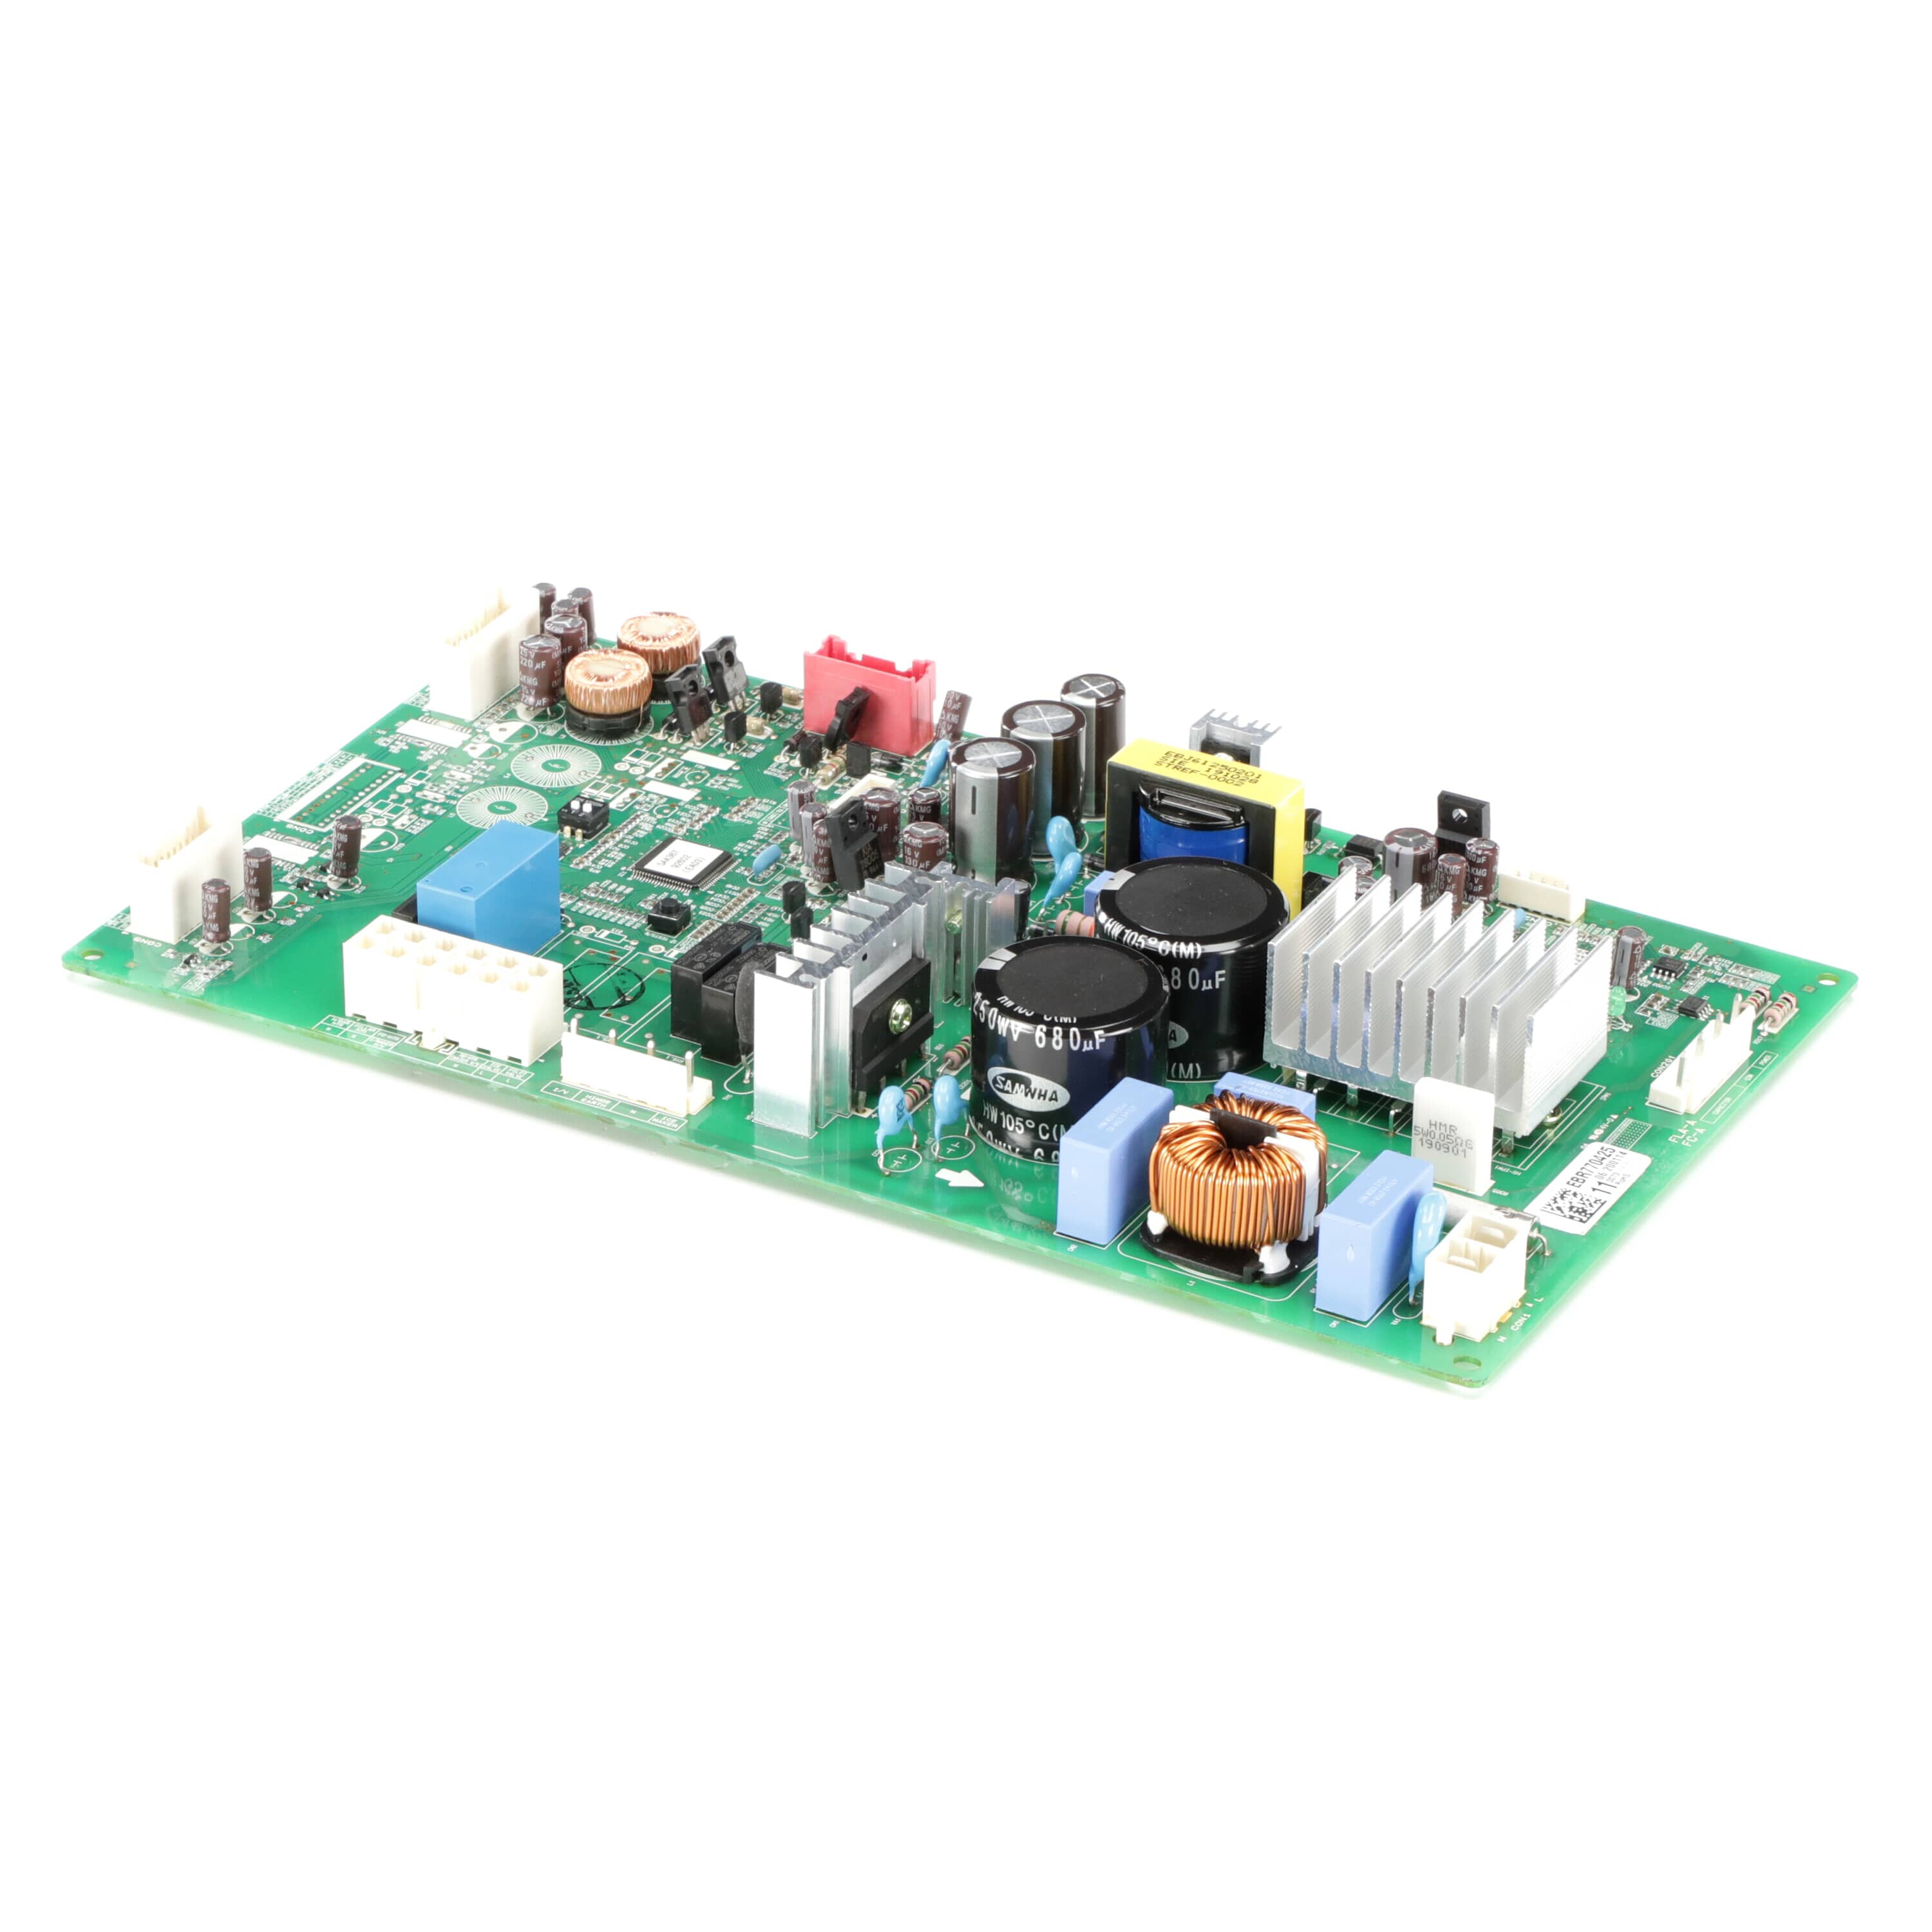 LG EBR77042511 Refrigerator Main PCB Assembly